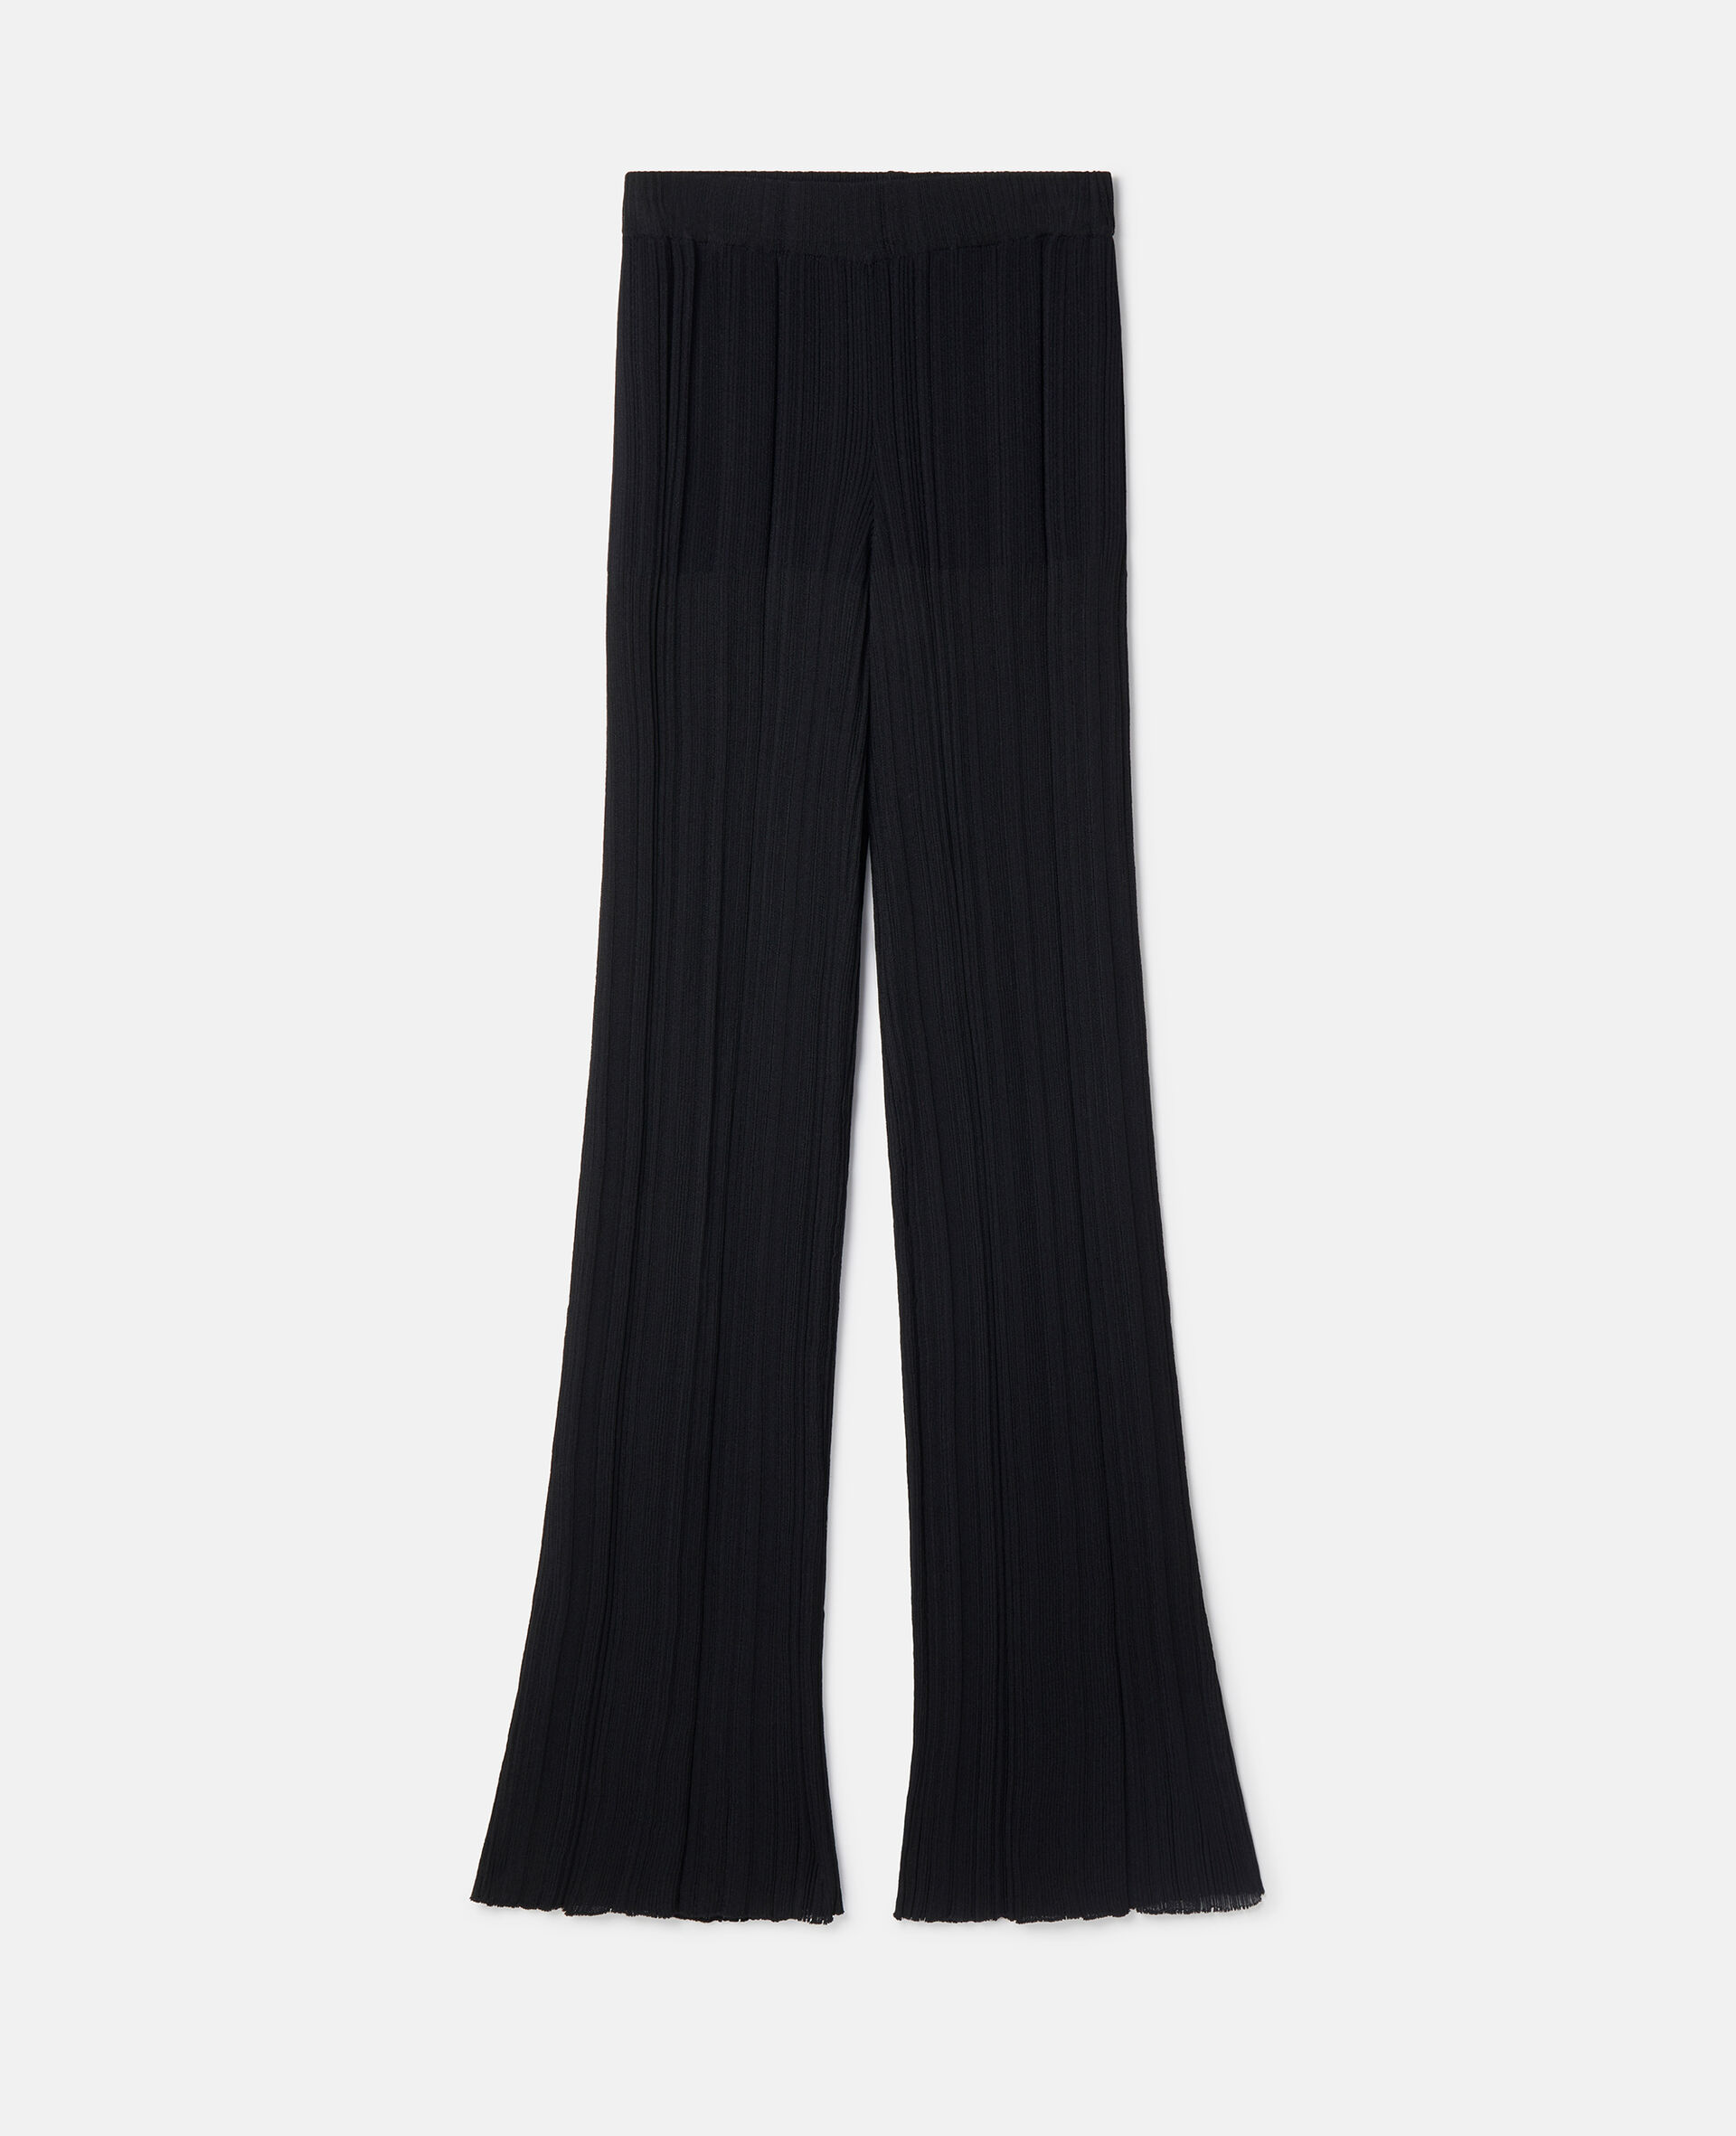 Plisse Pleat Knit Trousers-Black-large image number 0